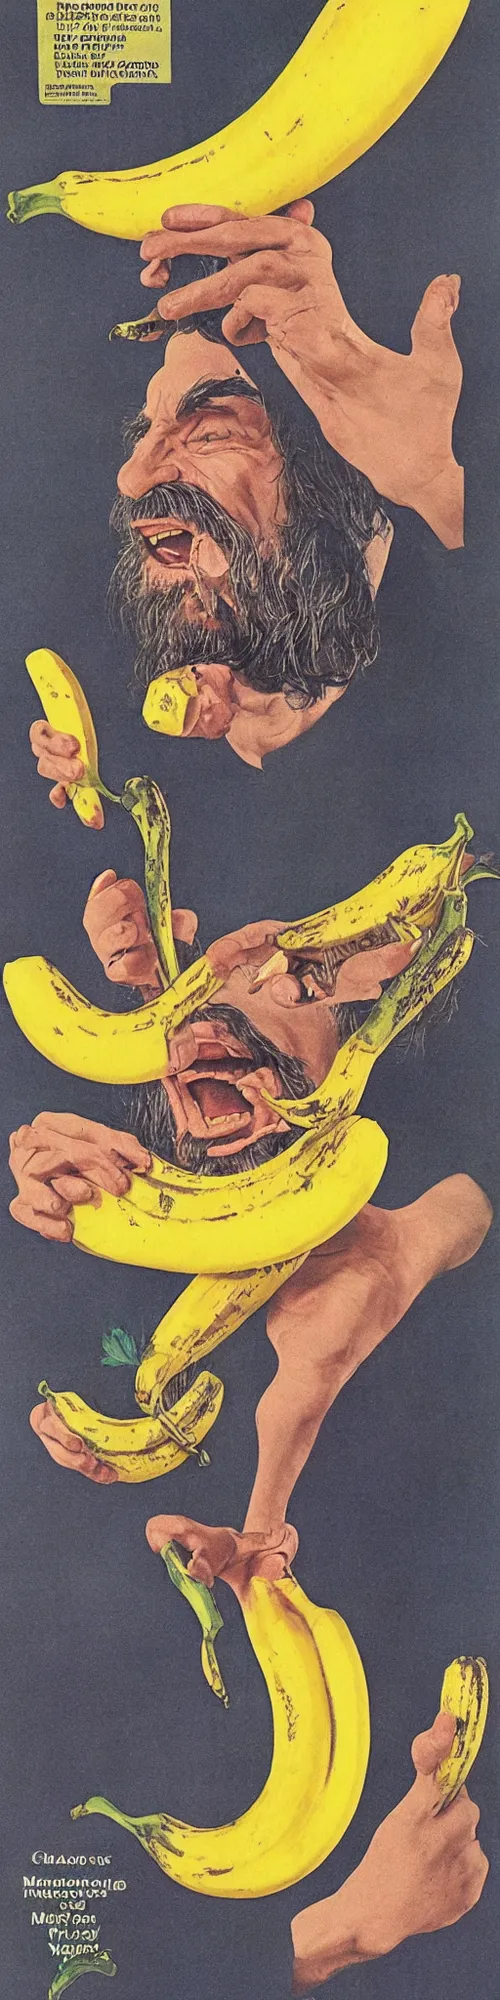 Image similar to vintage magazine advertisement depicting charles manson slipping on a banana peel, by alex grey